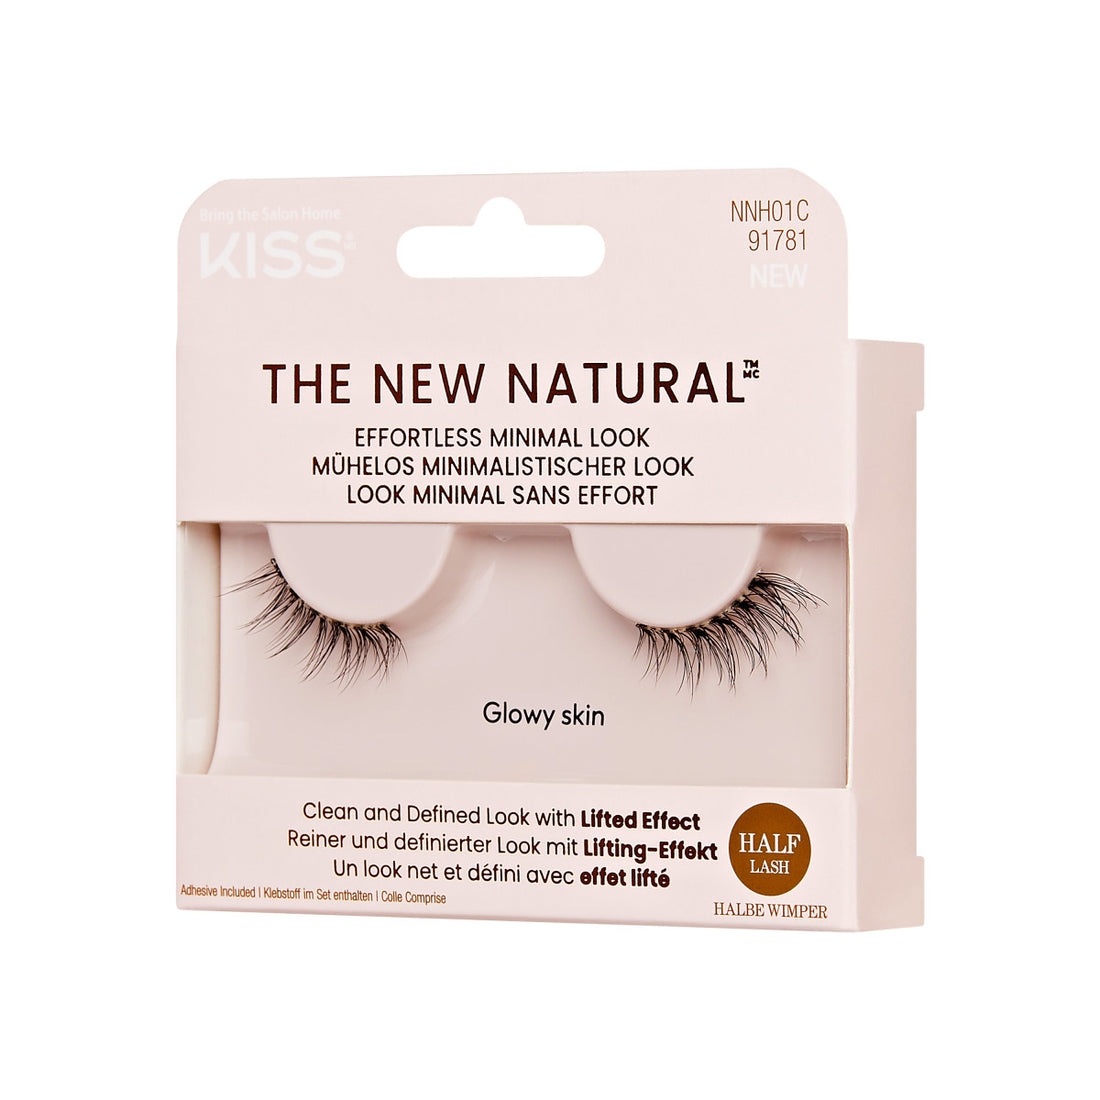 KISS The New Natural False Eyelashes Half Strip Lash Single Pack, &